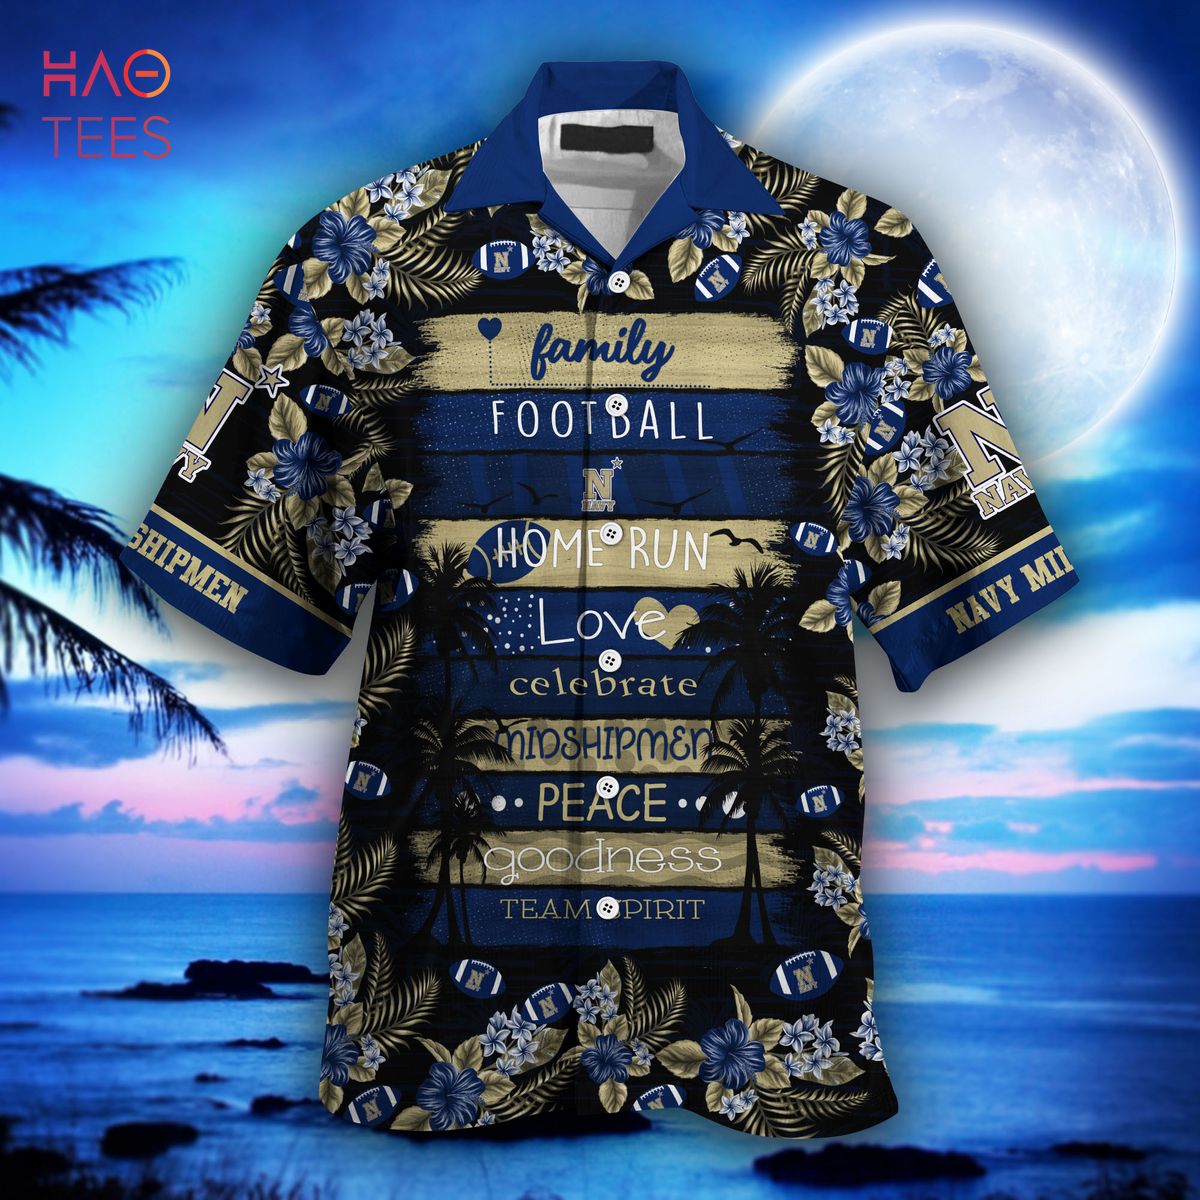 TRENDING] Navy Midshipmen Summer Hawaiian Shirt And Shorts, For